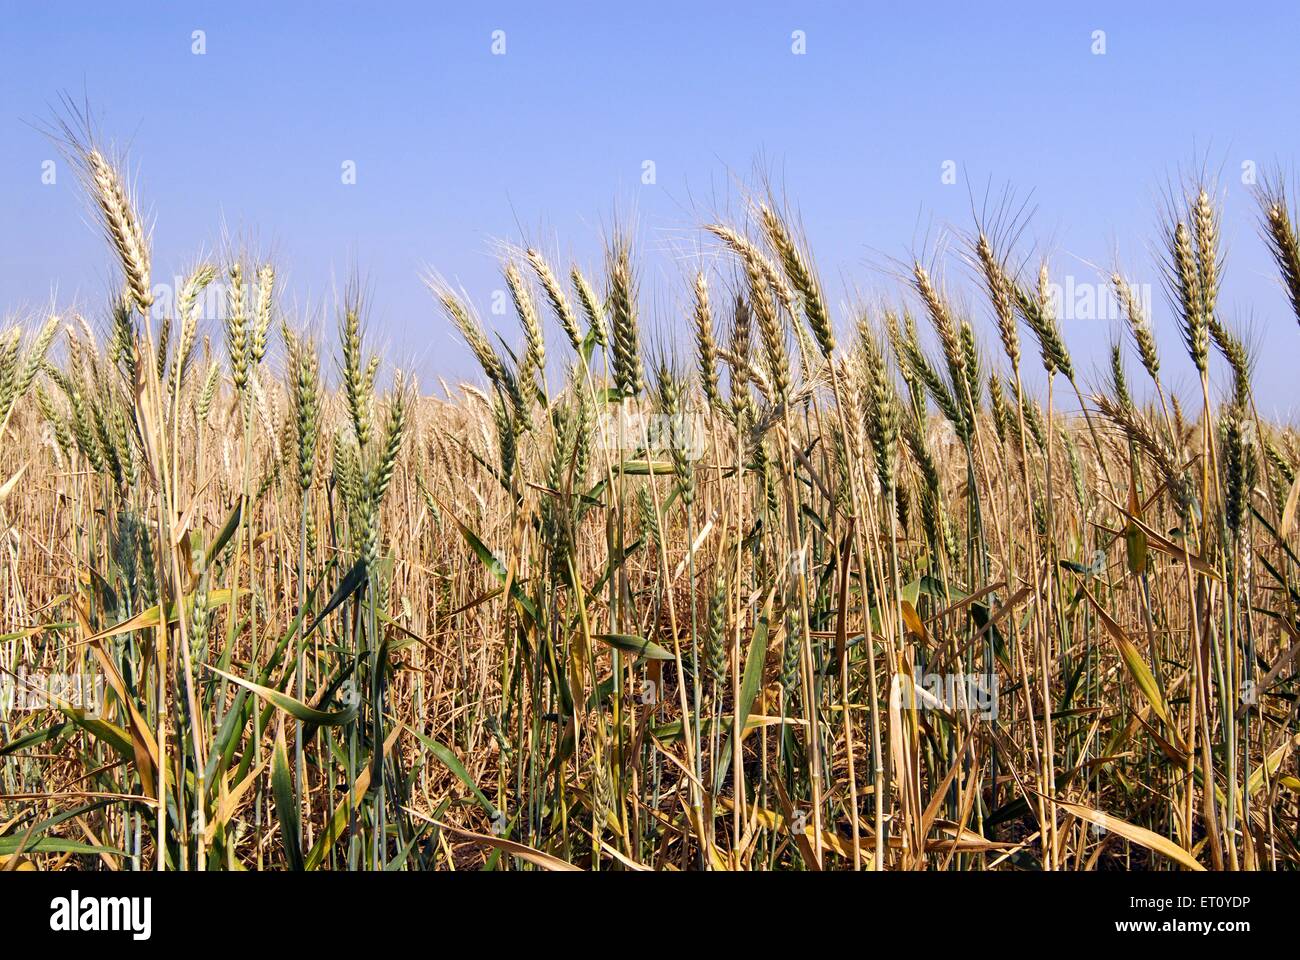 Wheat crop ready for harvesting, village Urli Kanchan, Pune, Maharashtra, India Stock Photo